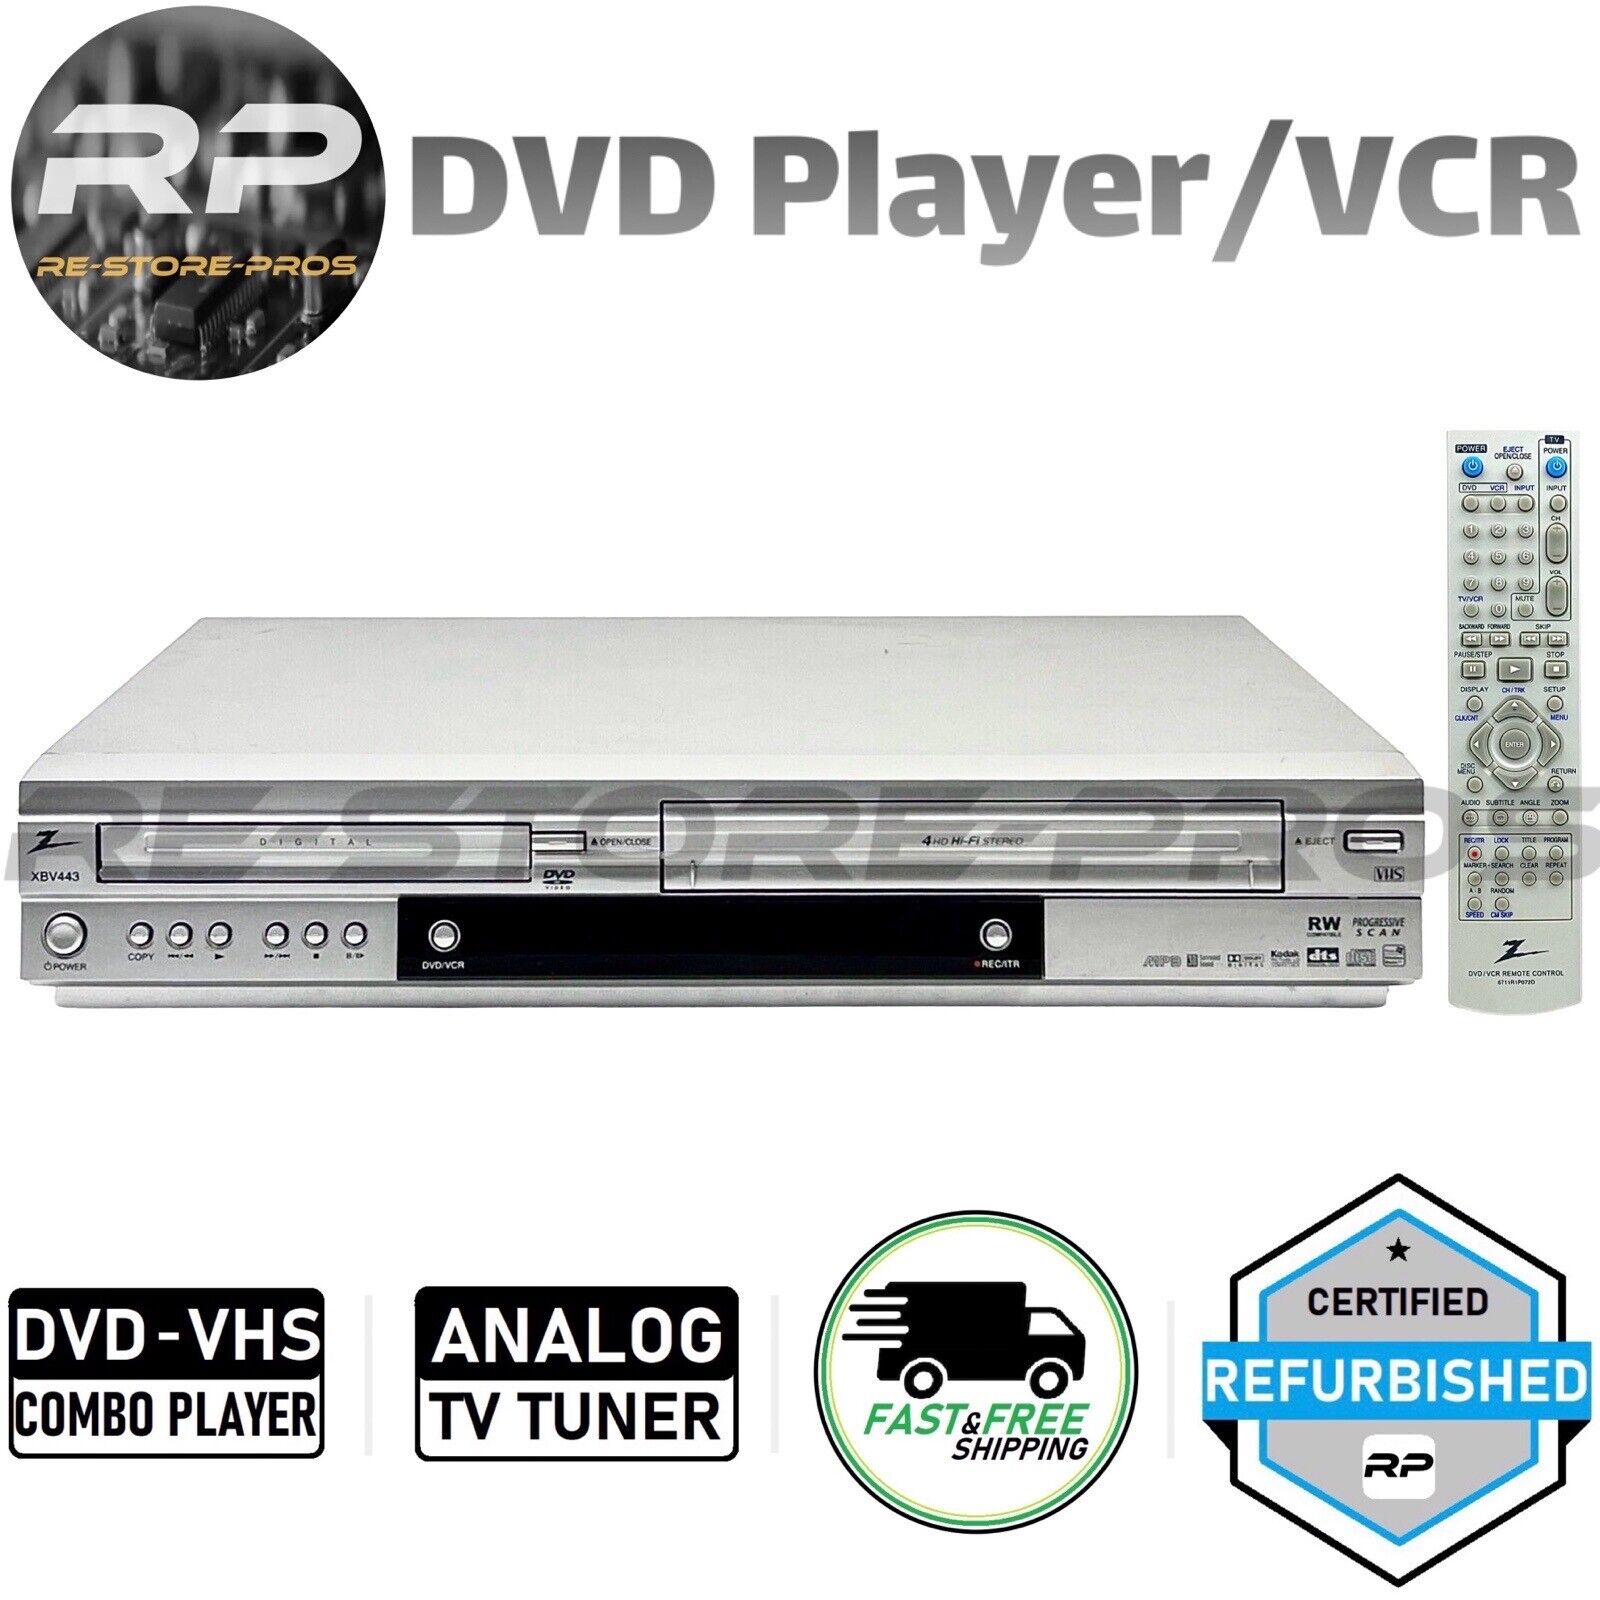 Zenith XBV443 DVD VCR Combo Player VHS Hi-Fi Stereo Progressive Scan